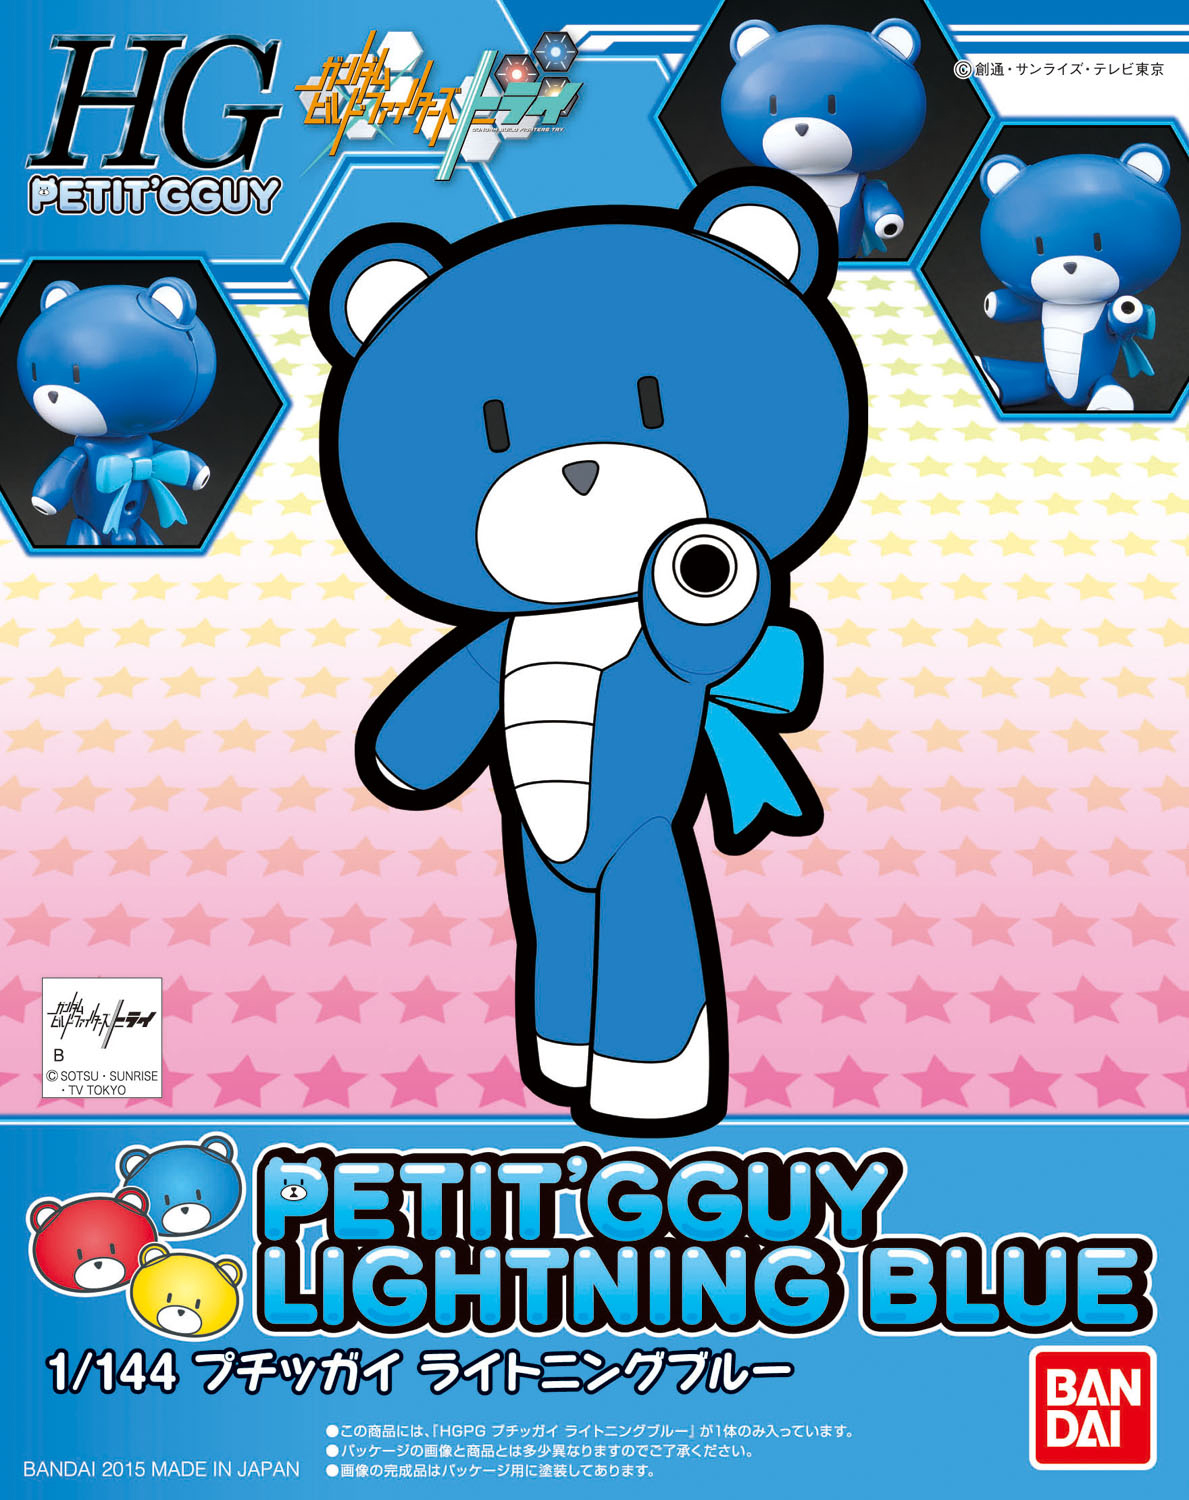 HGPG 1/144 プチッガイ ライトニングブルー [Petit’gguy Lightning Blue] 5059146 0200583